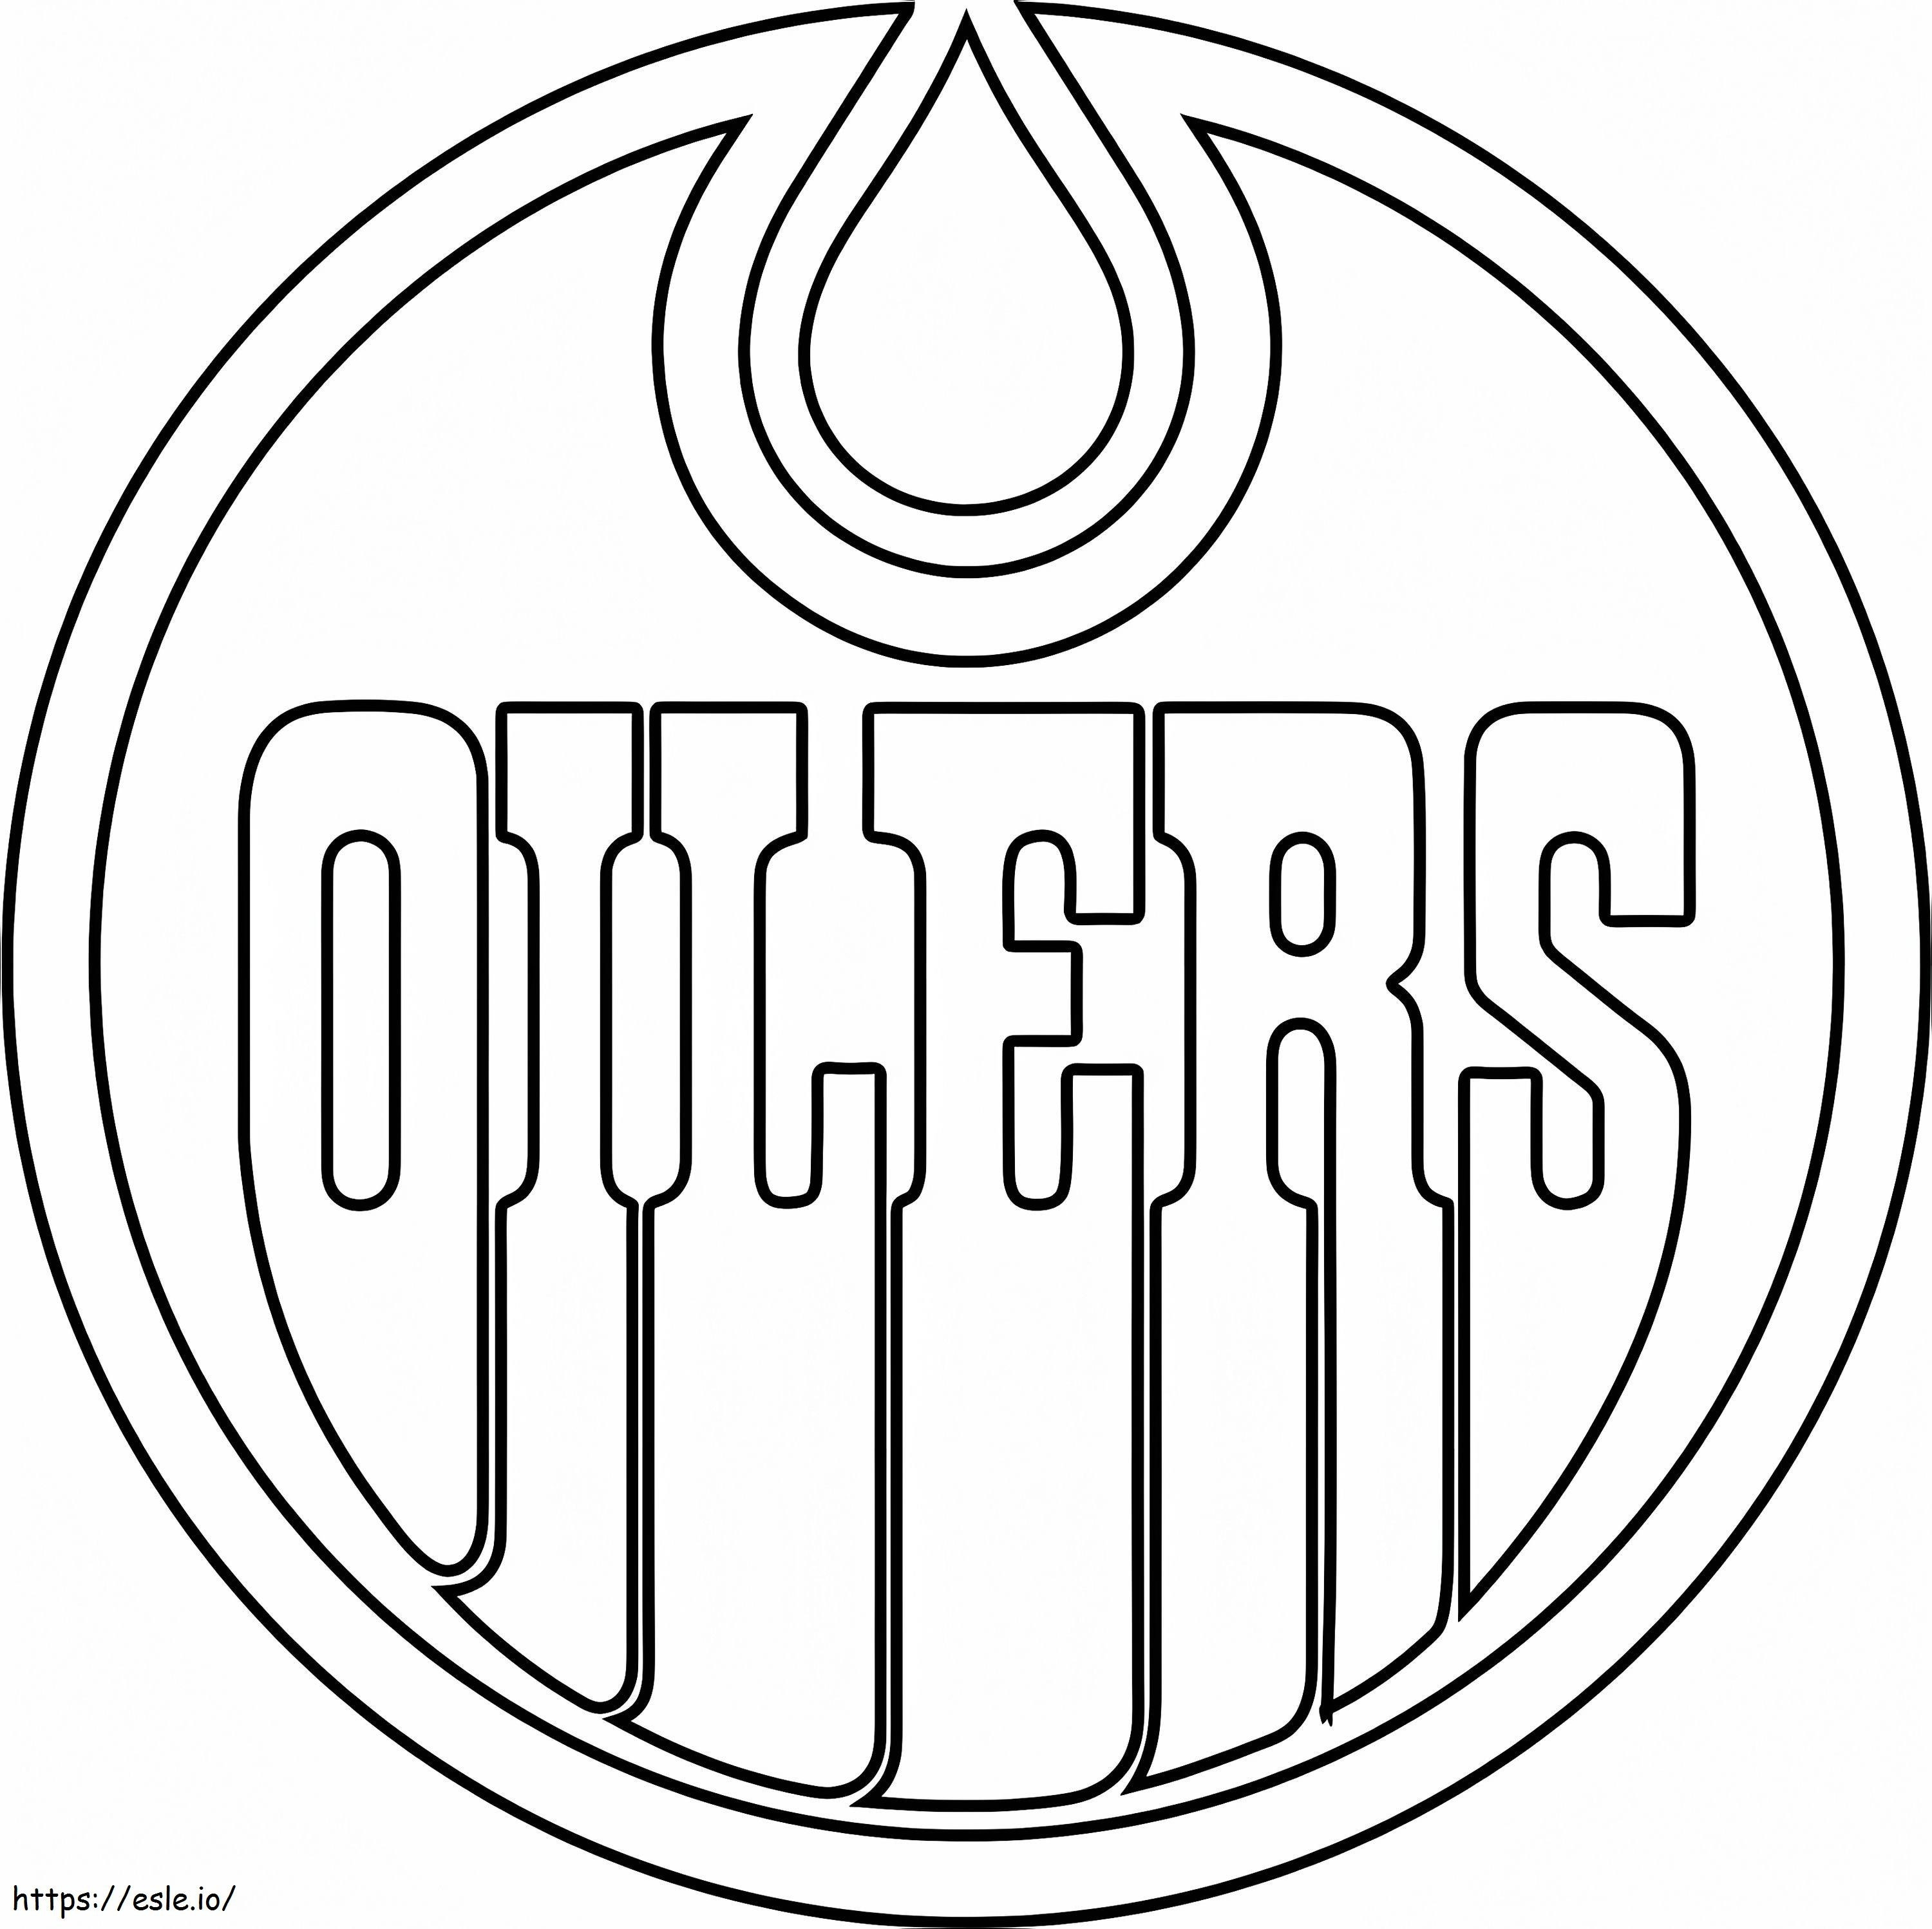 Edmonton Oilers-logo kleurplaat kleurplaat